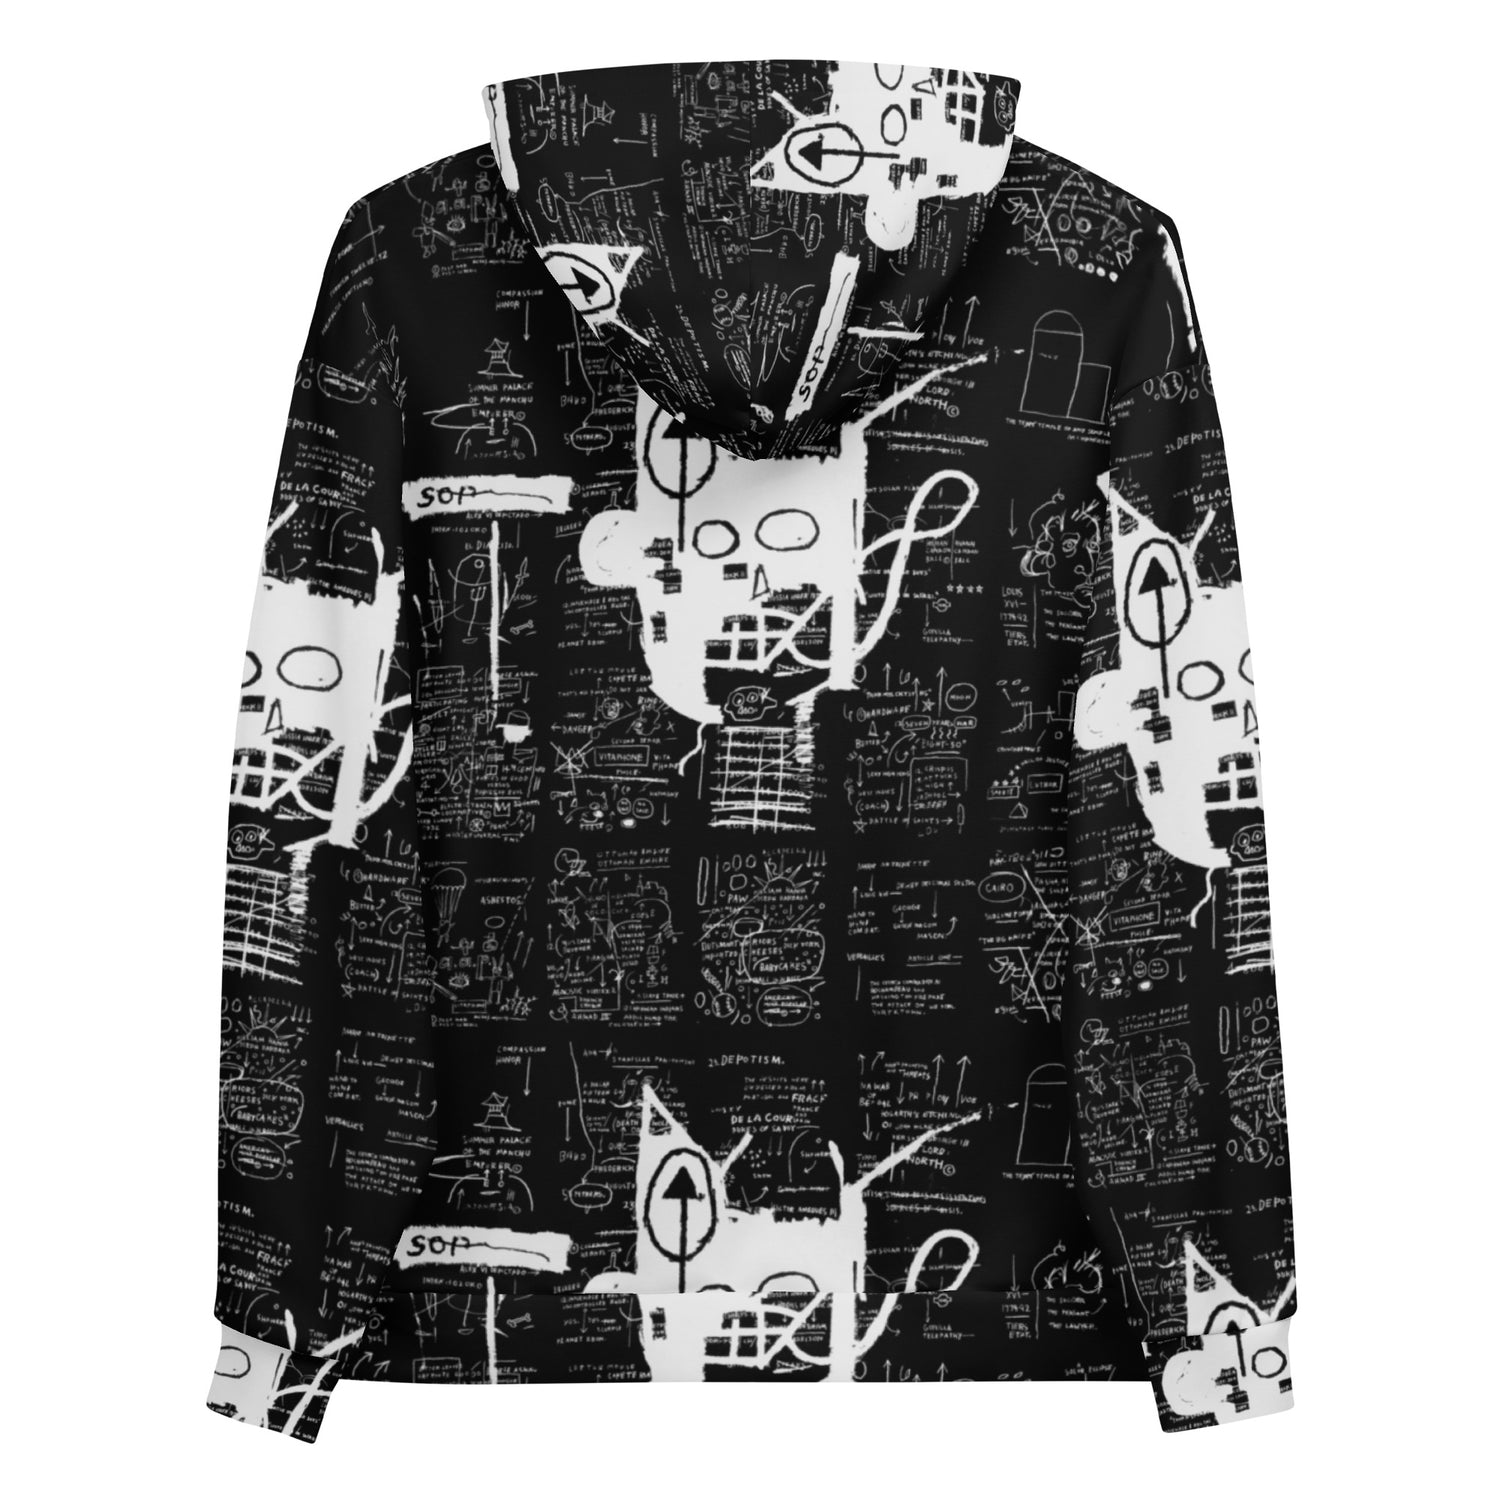 Jean-Michel Basquiat "Untitled" Artwork Printed Premium Streetwear Sweatshirt Hoodie Graffiti Harajuku